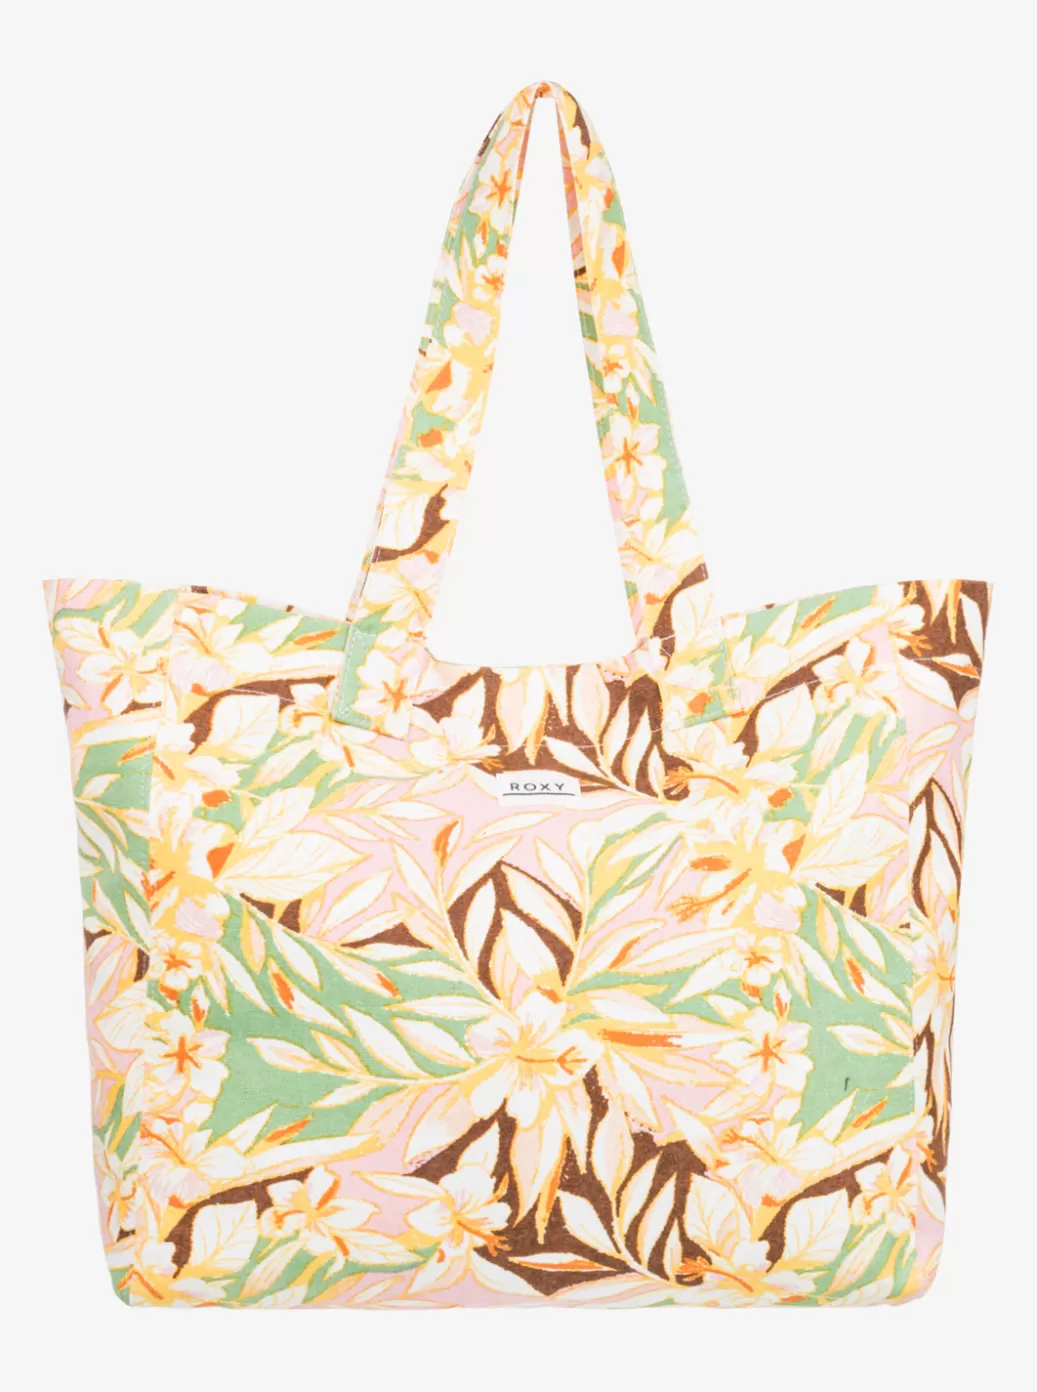 Handbags | WOMEN ROXY Anti Bad Vibes Printed Tote Bag Quiet Green Coast 2 Coast